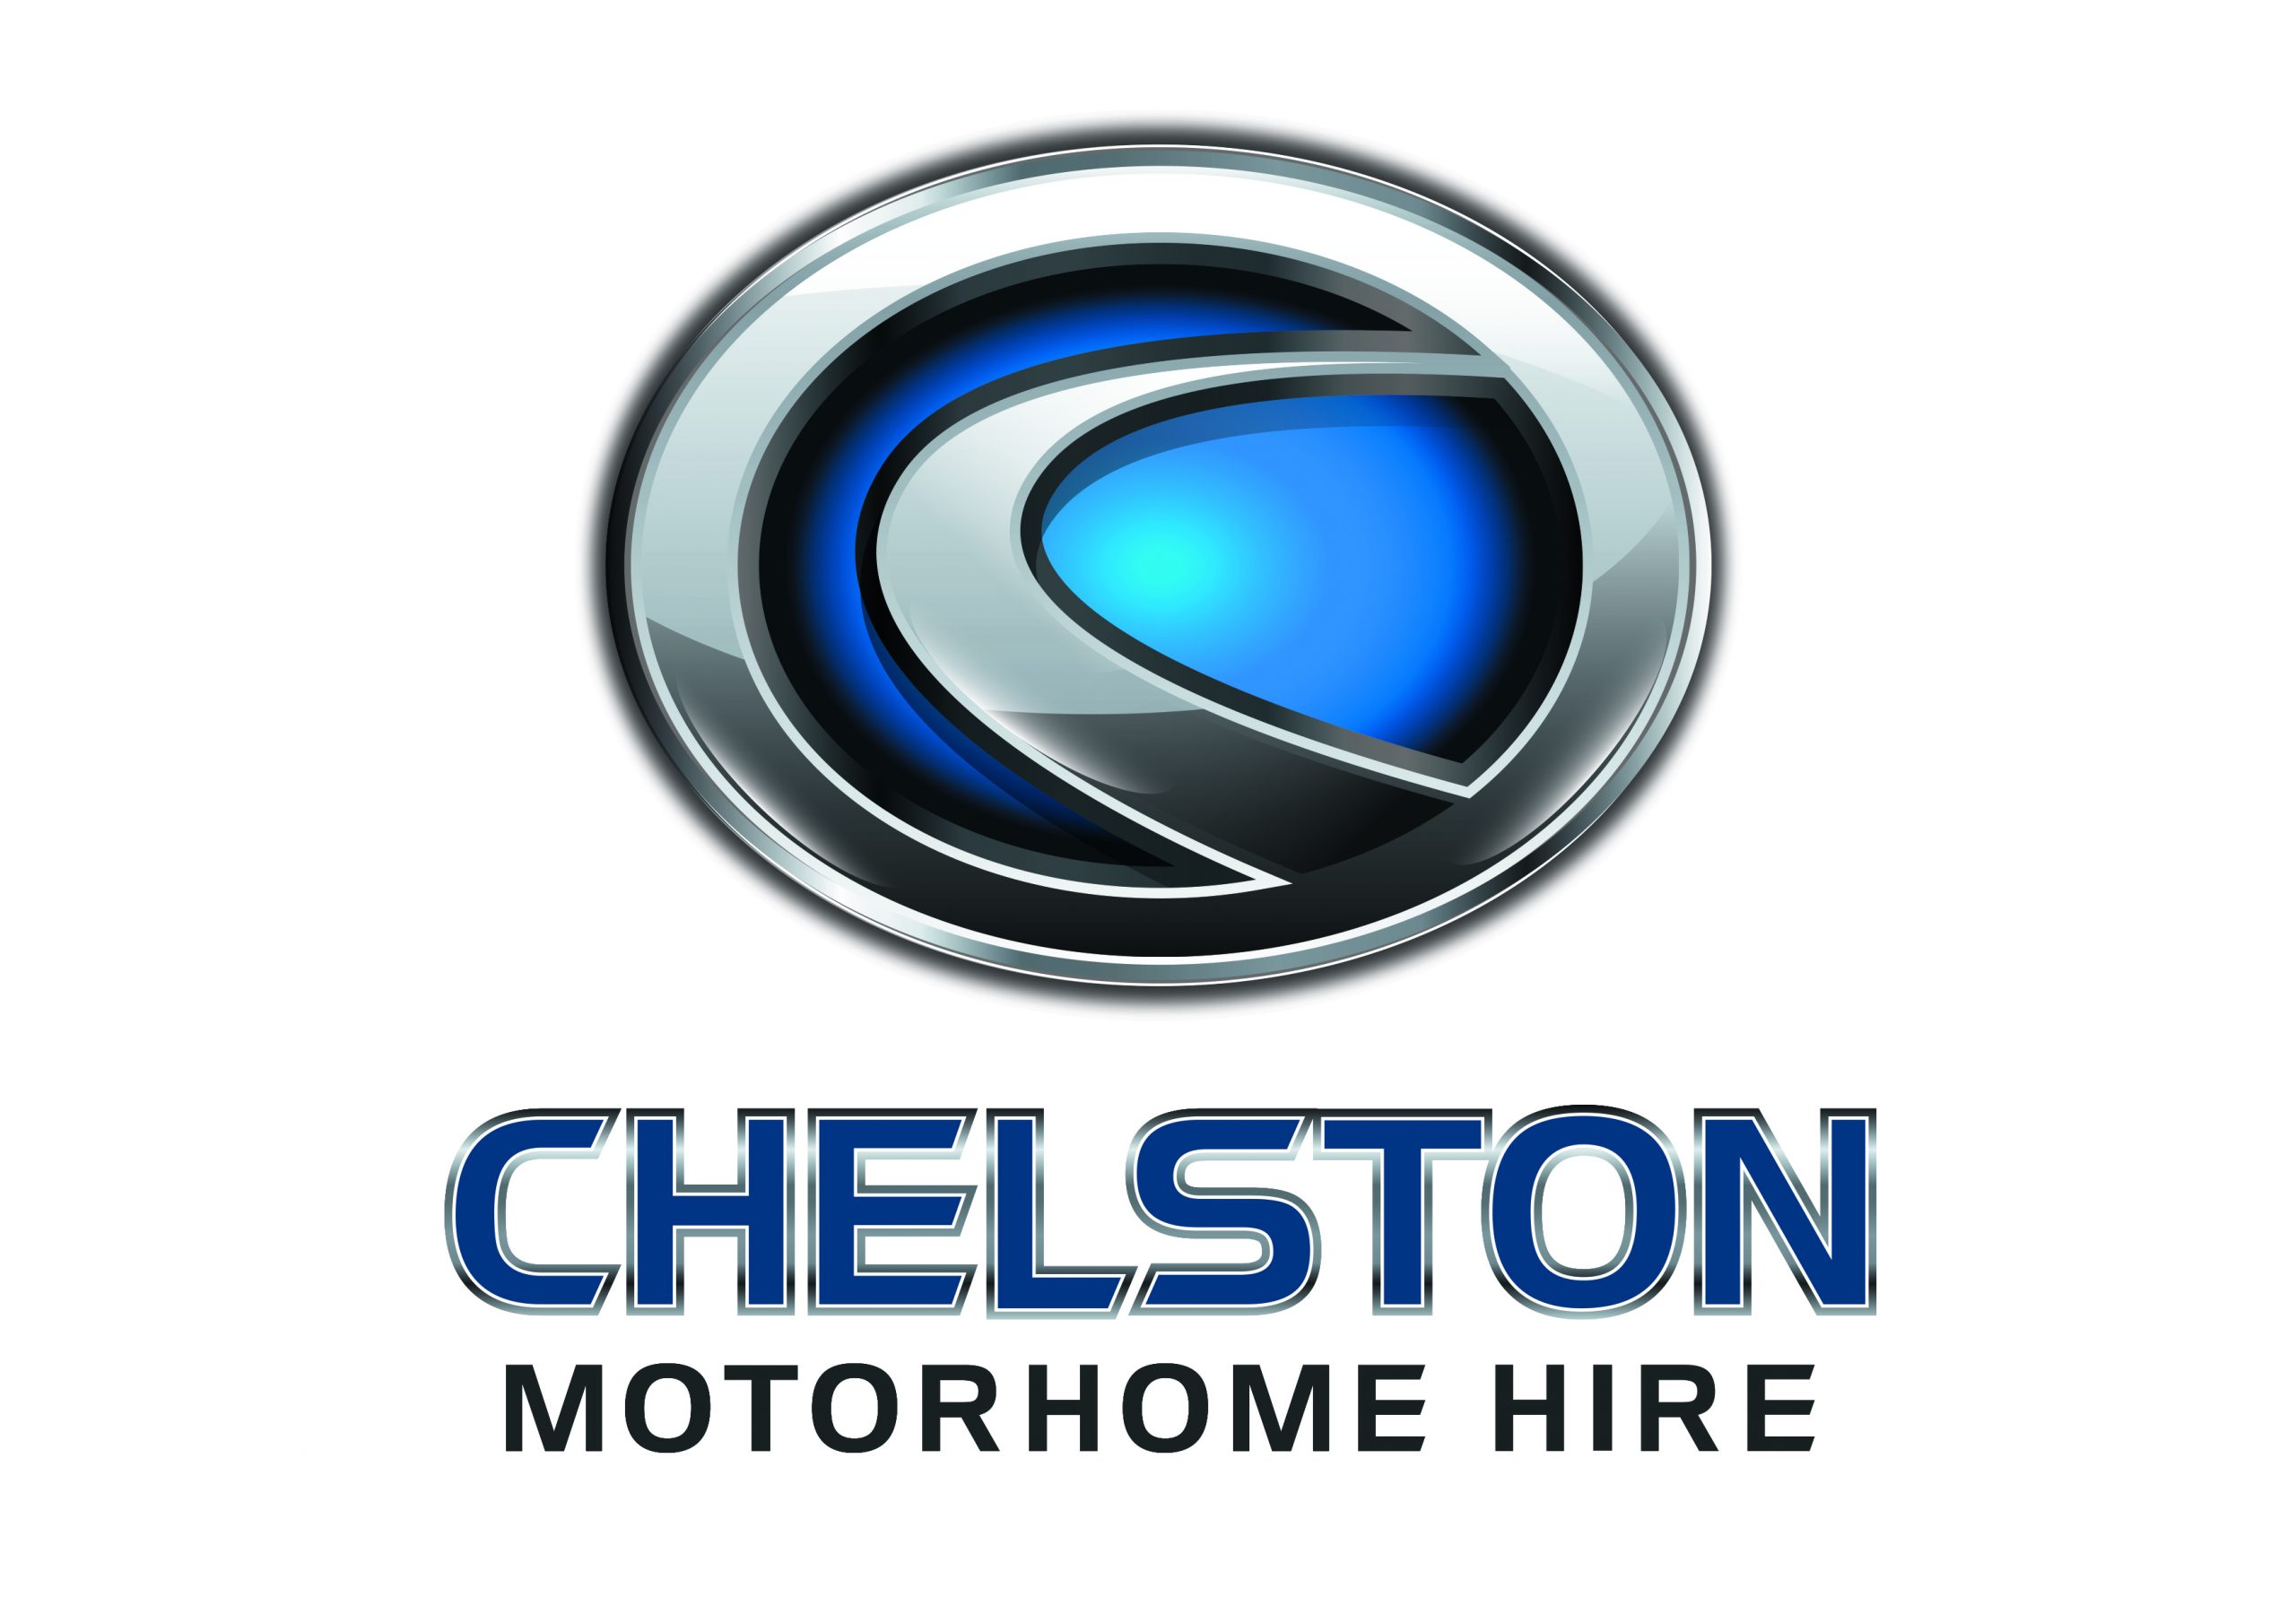 Chelston Motorhome Hire logo